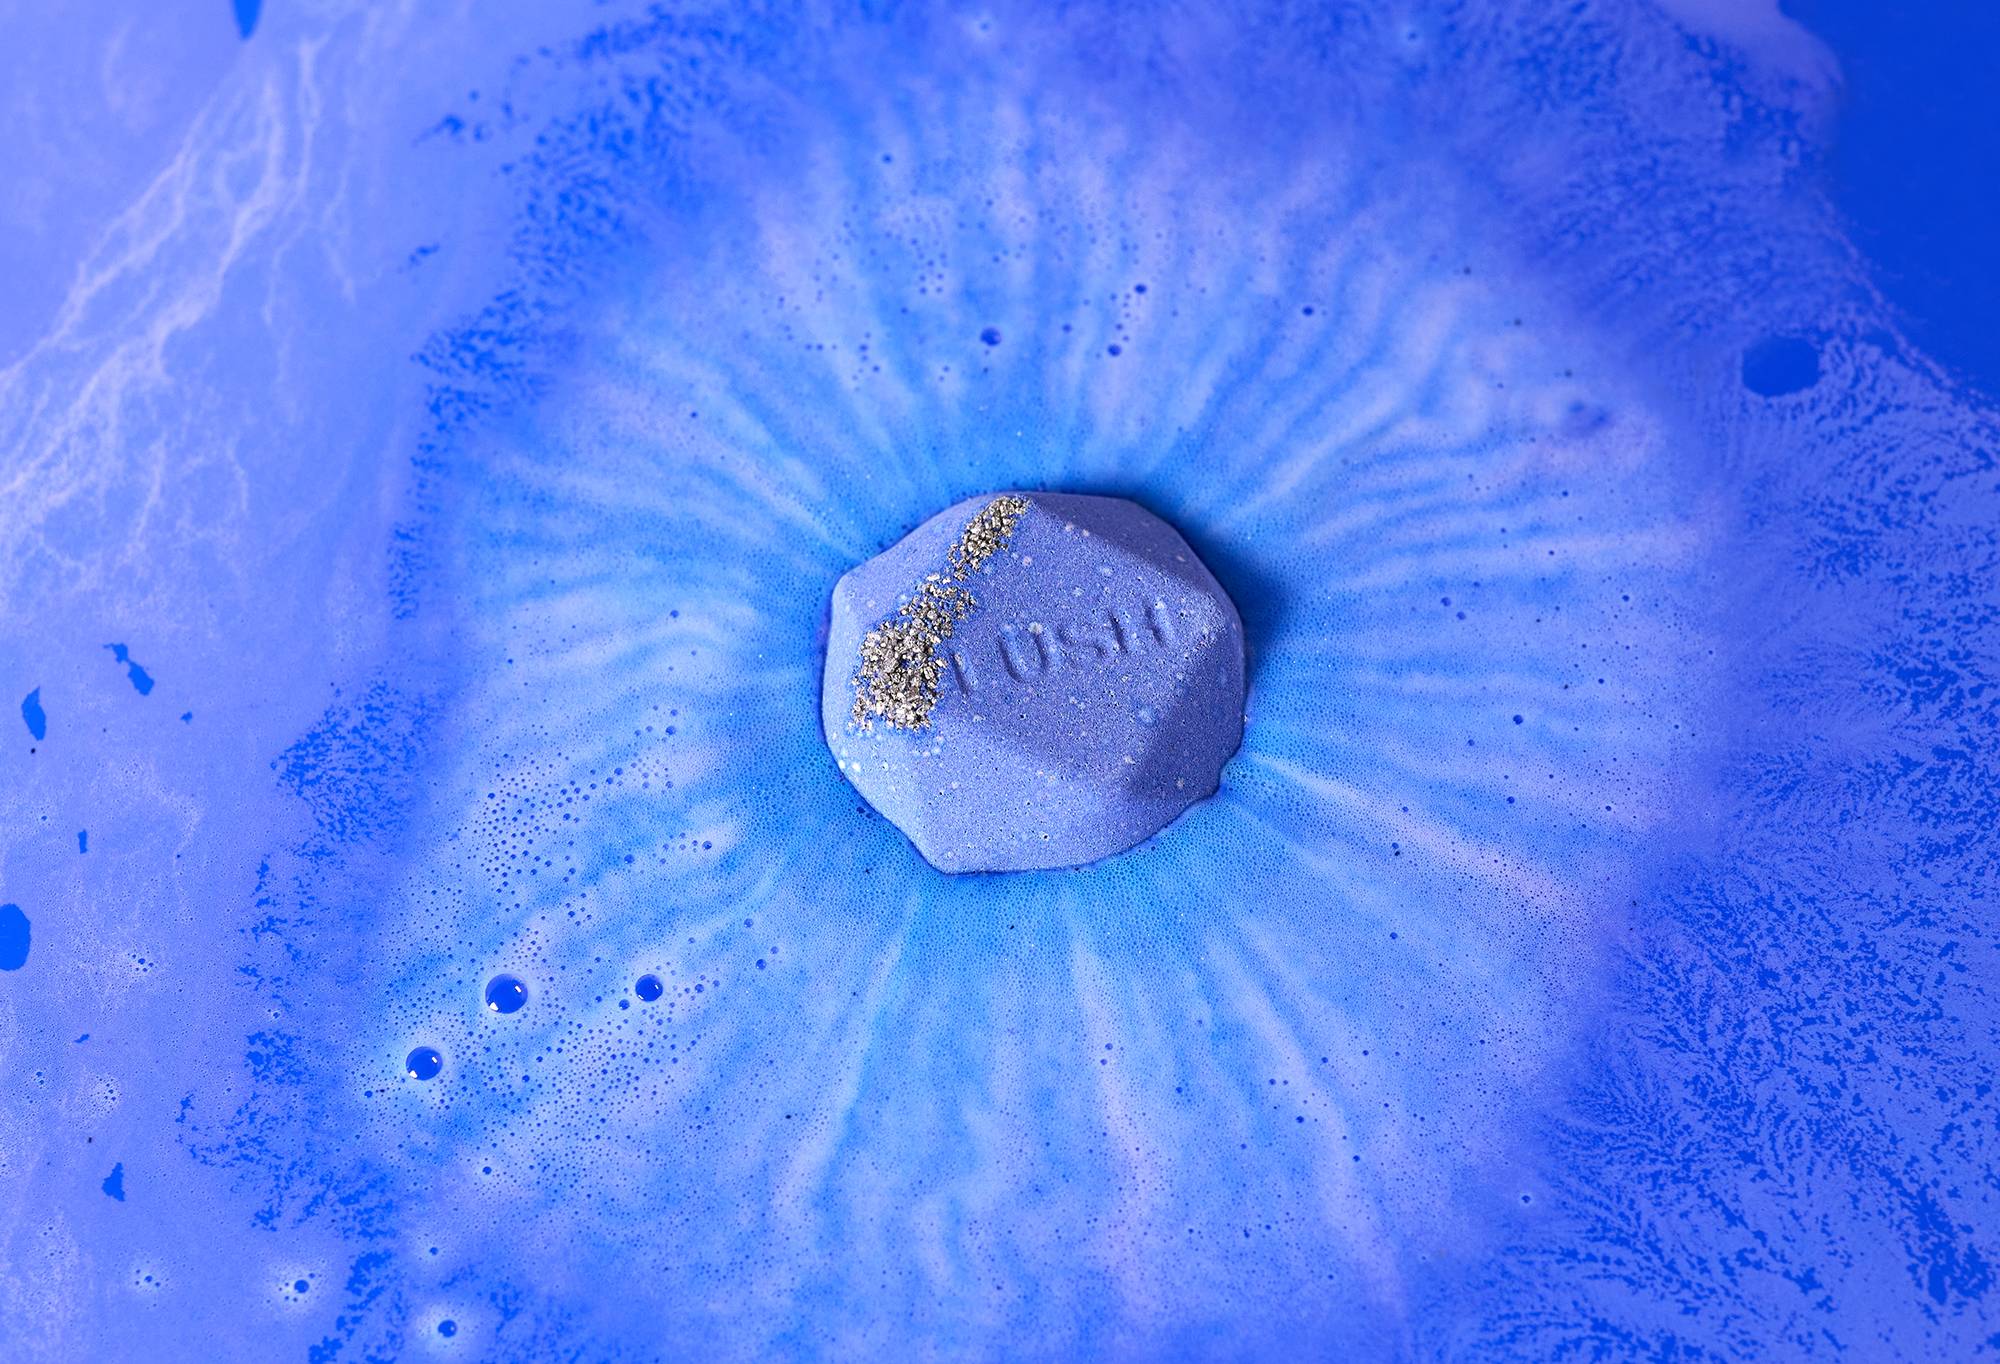 Uchumizu bath bomb floats among deep blue swirls with blue-coloured sugar and "Lush" embossed on top.